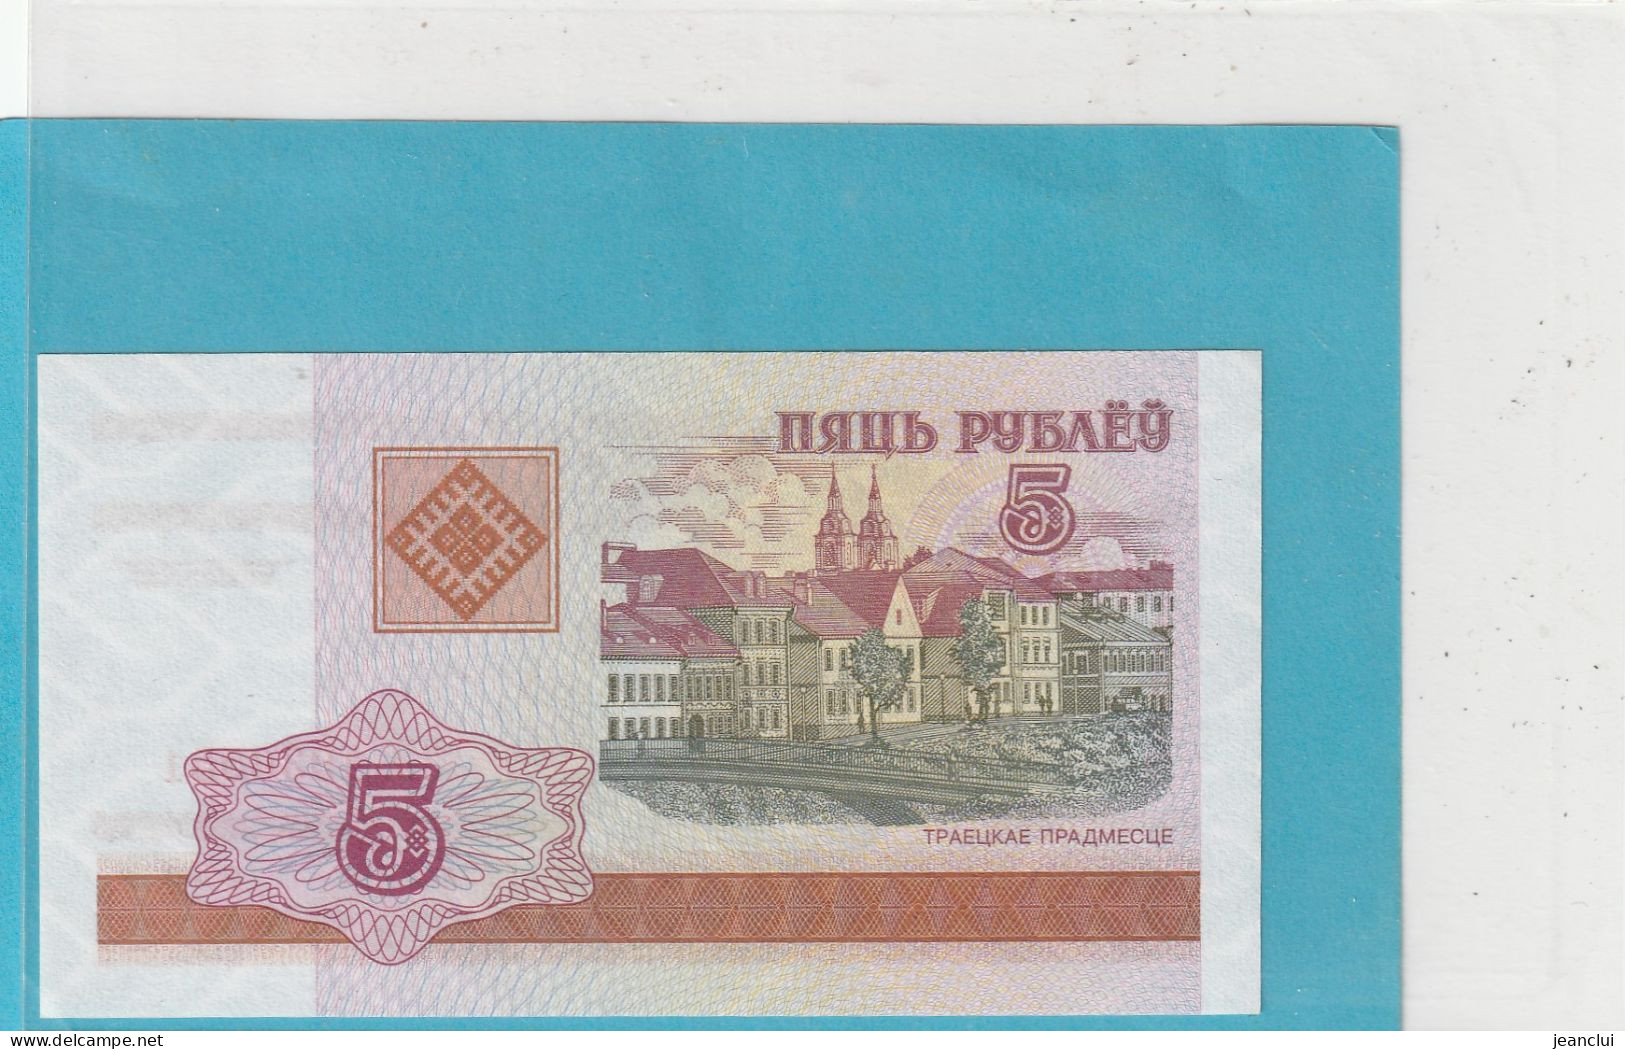 BELARUS NATIONAL BANK  .  5 RUBLEI   . N°  BB 4936551 .  2000     2 SCANNES  .  BILLET ETAT LUXE - Wit-Rusland